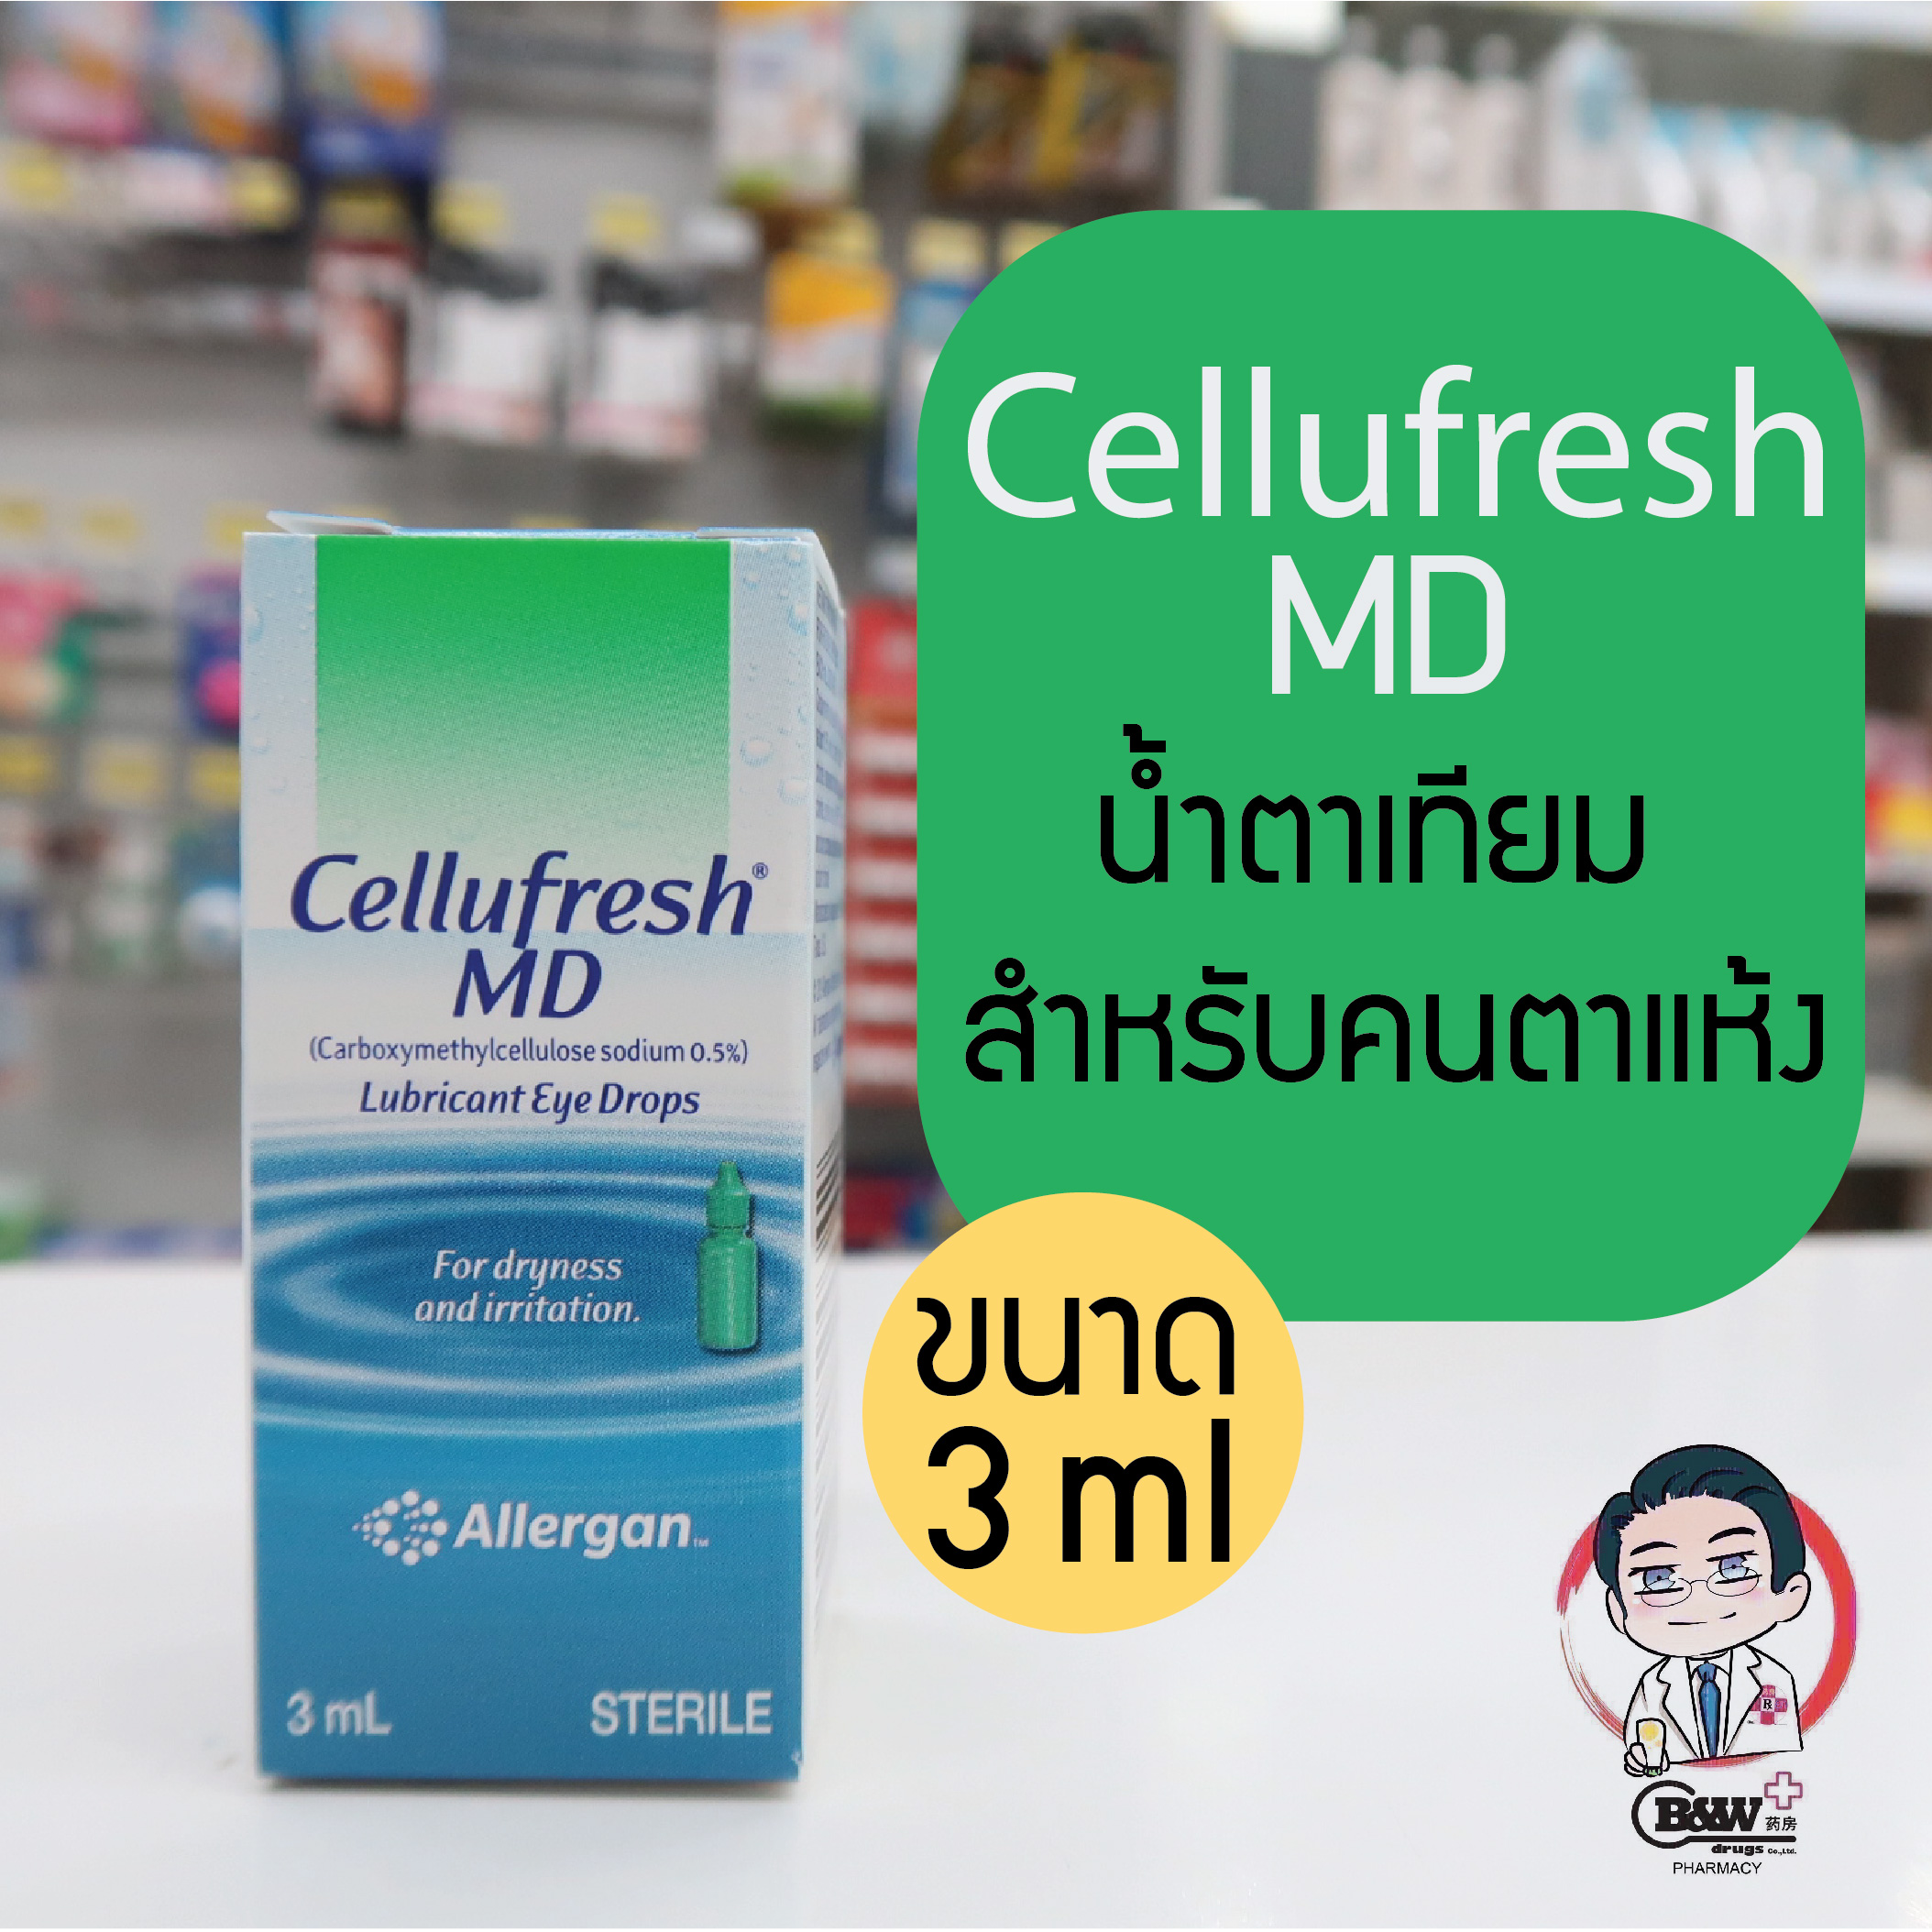 Cellufresh MD น้ำตาเทียม 3 ml. (1 หลอด)